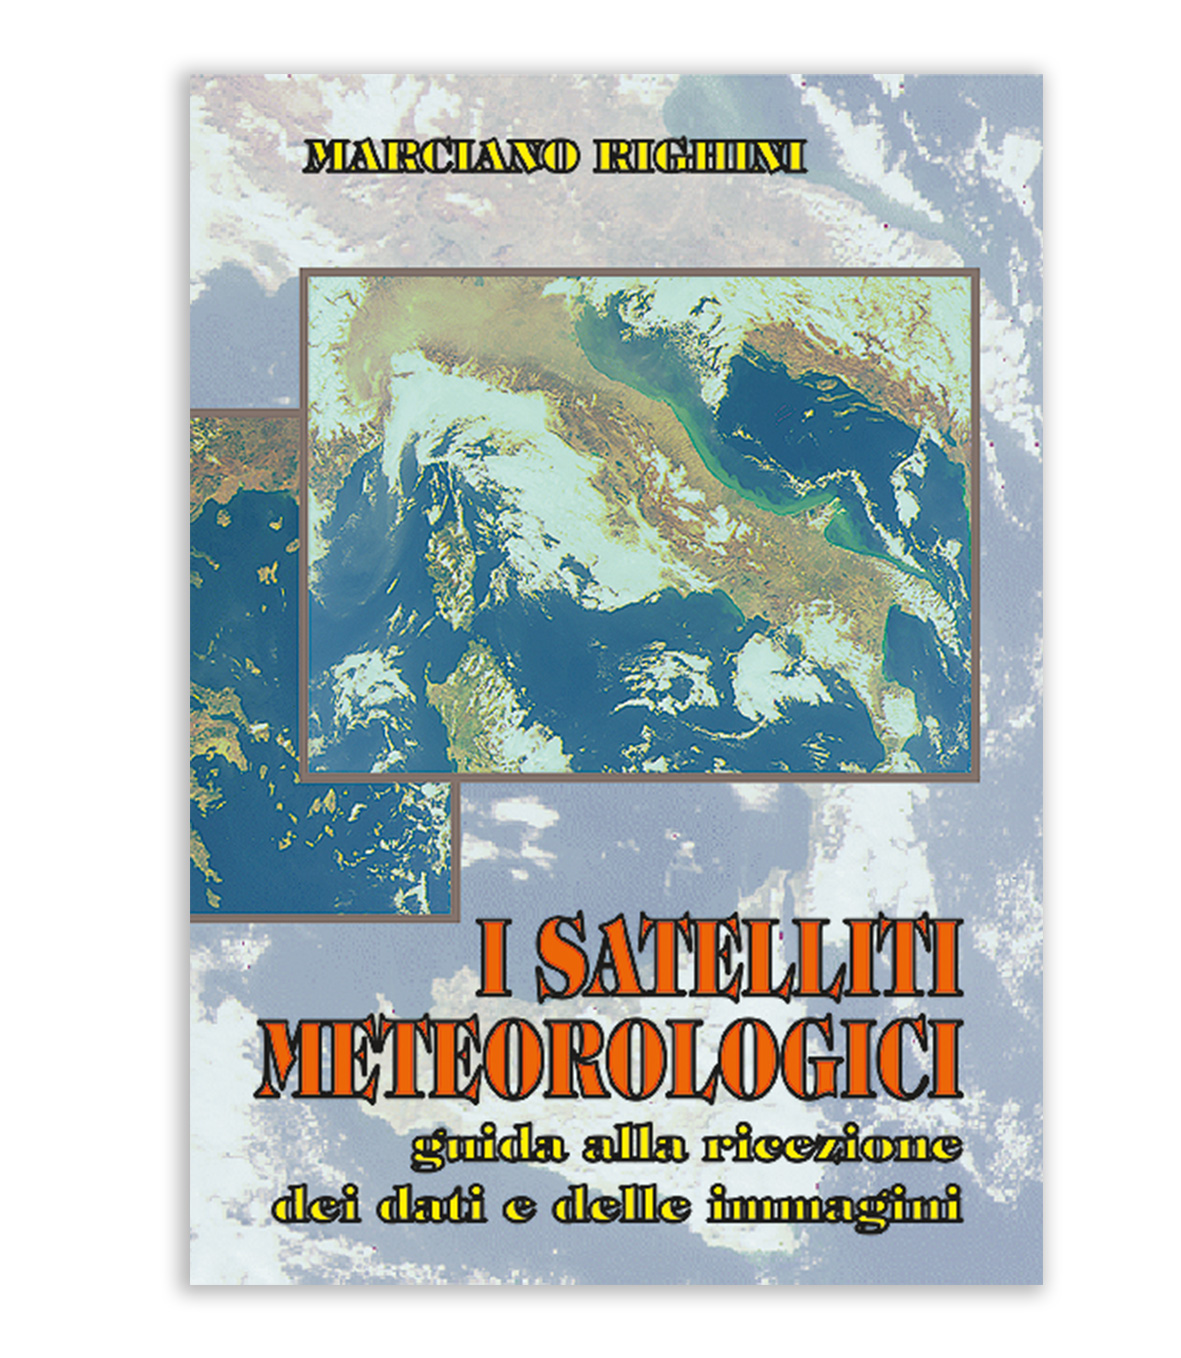 Libro-Satelliti-meteorologici8.jpg